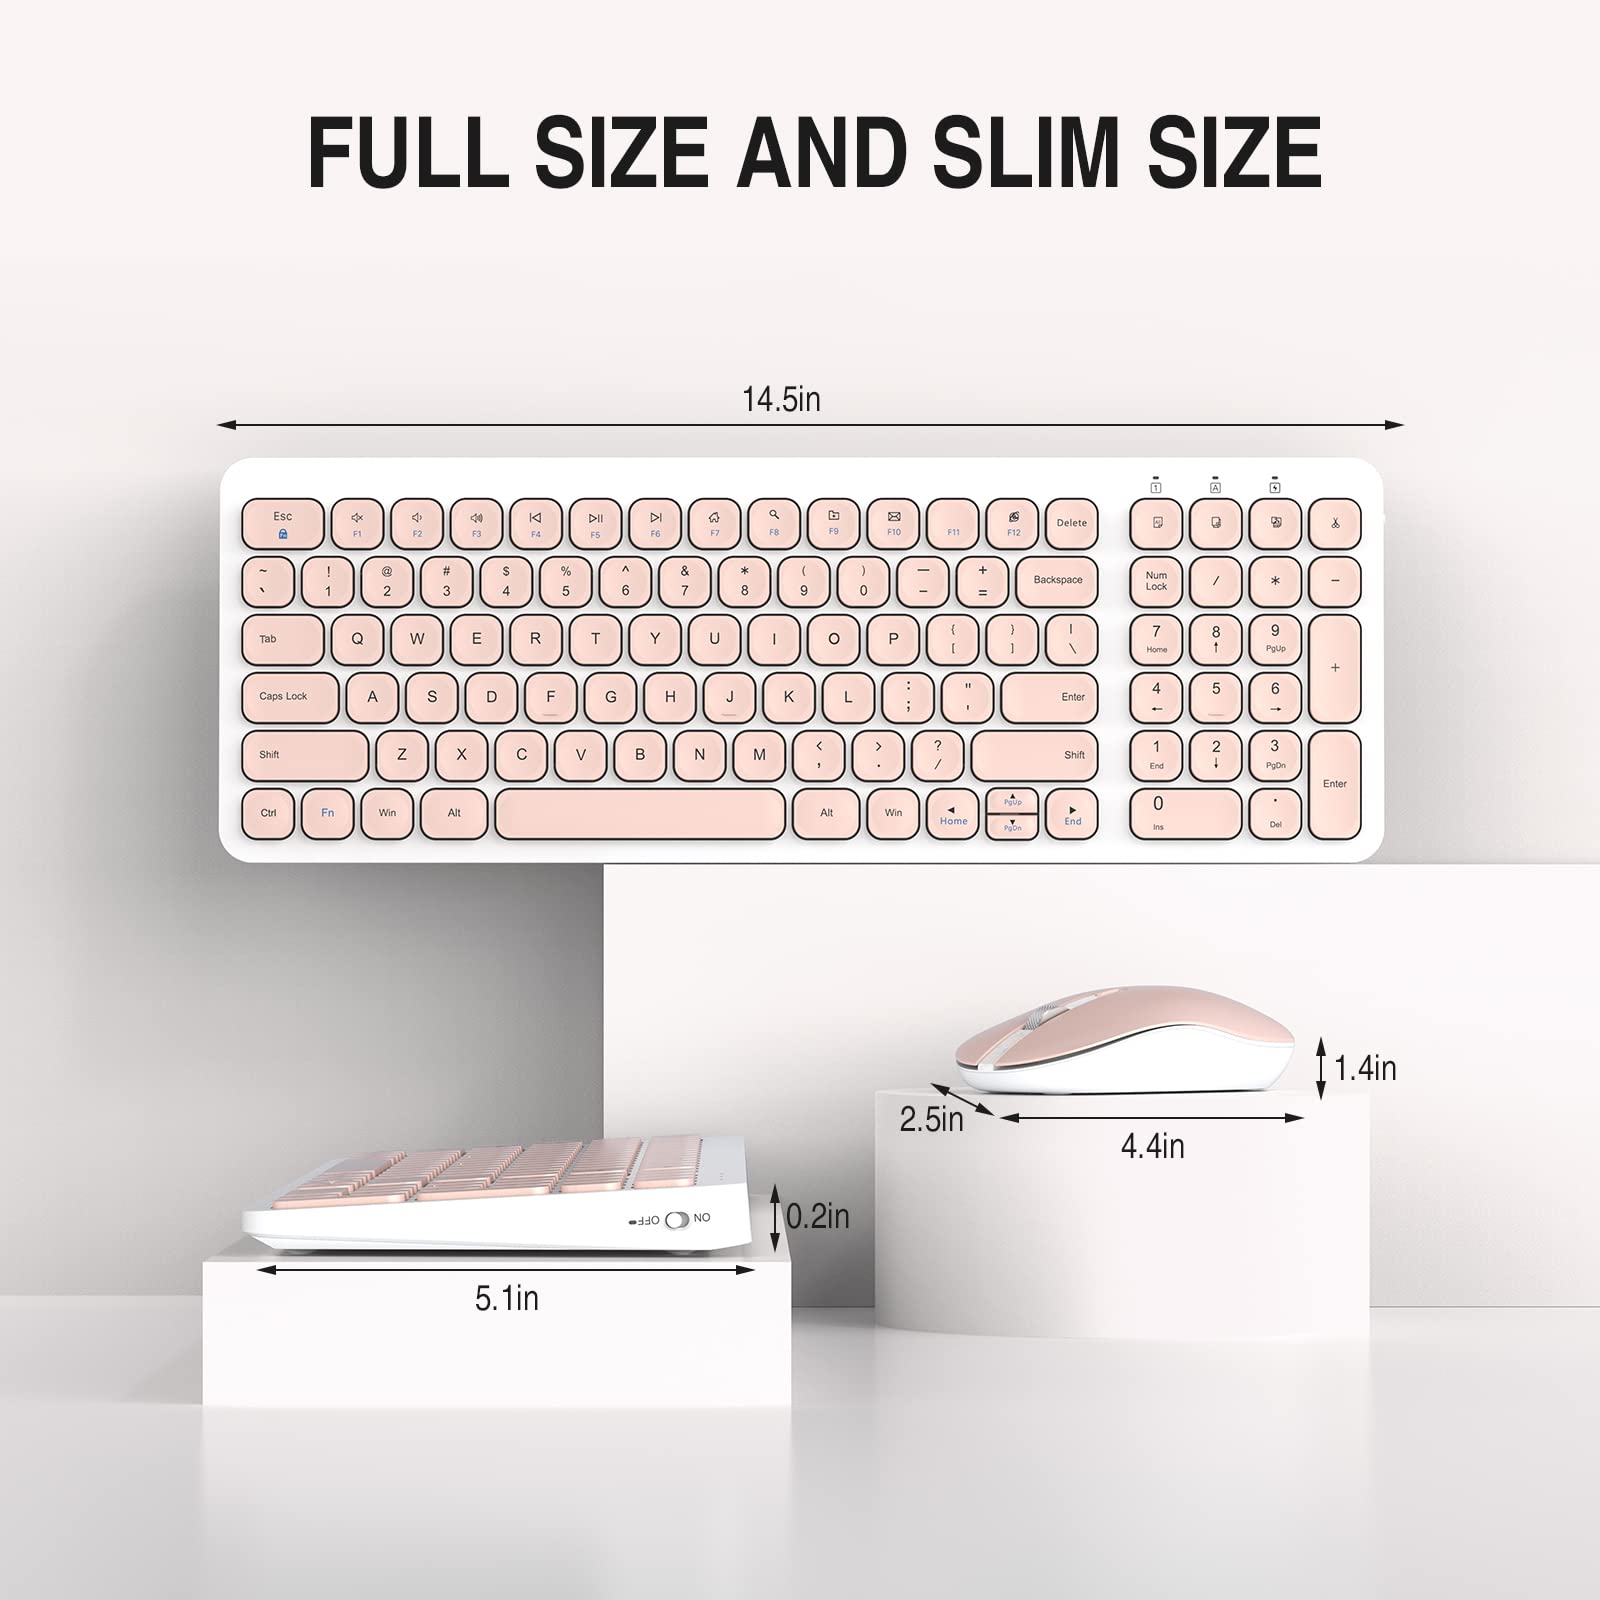 Wireless Keyboard Mouse Combo, cimetech Compact Full Size Wireless Keyboard and Mouse Set Less Noise Keys 2.4G Ultra-Thin Sleek Design for Windows, Computer, PC, Notebook, Laptop - Bright Pink